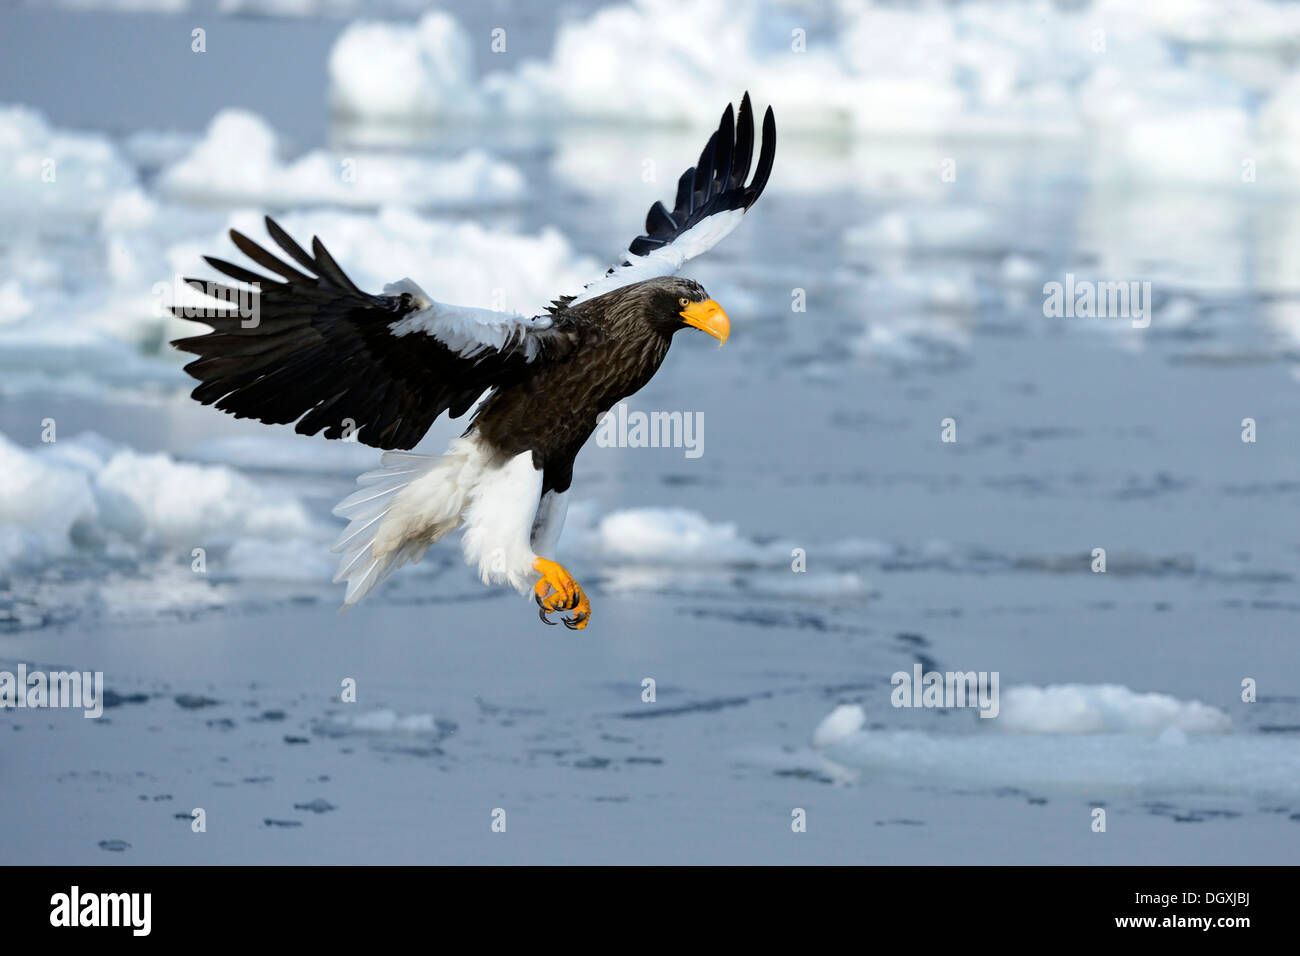 Steller's Sea Eagle (Haliaeetus pelagicus) in flight above floating ice, landing approach, Rausu, Menashi, Hokkaido, Japan Stock Photo